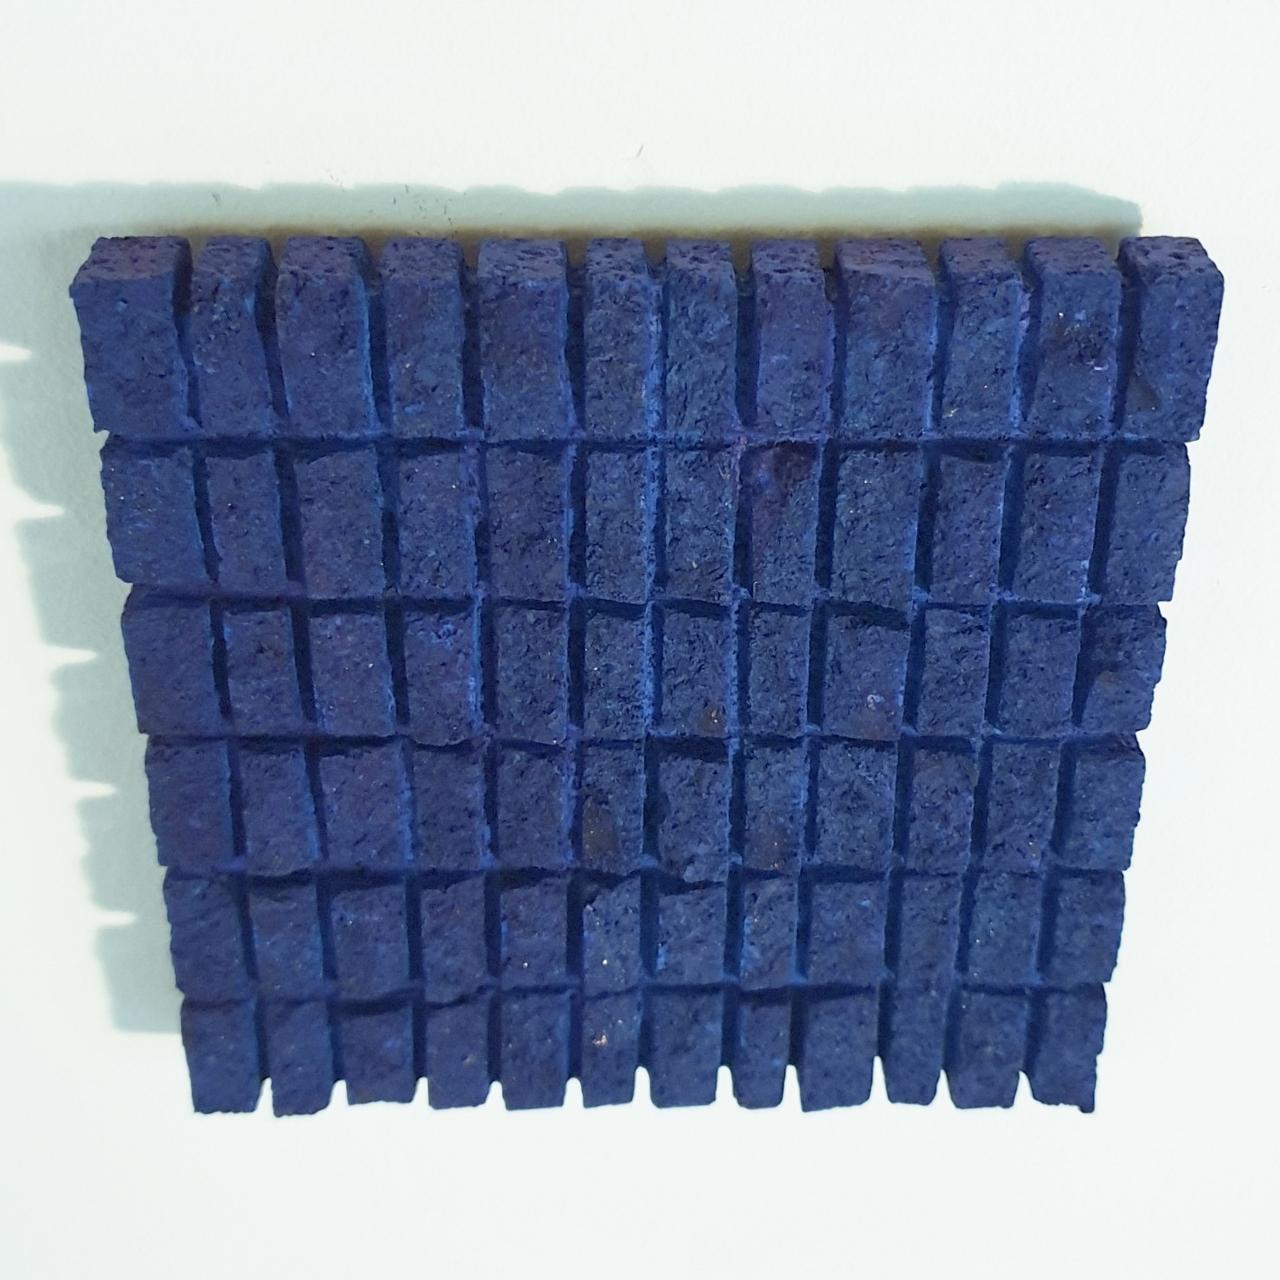 o.T. (Bl15Rc) - blue contemporary modern wall sculpture painting relief - Contemporary Sculpture by Dieter Kränzlein